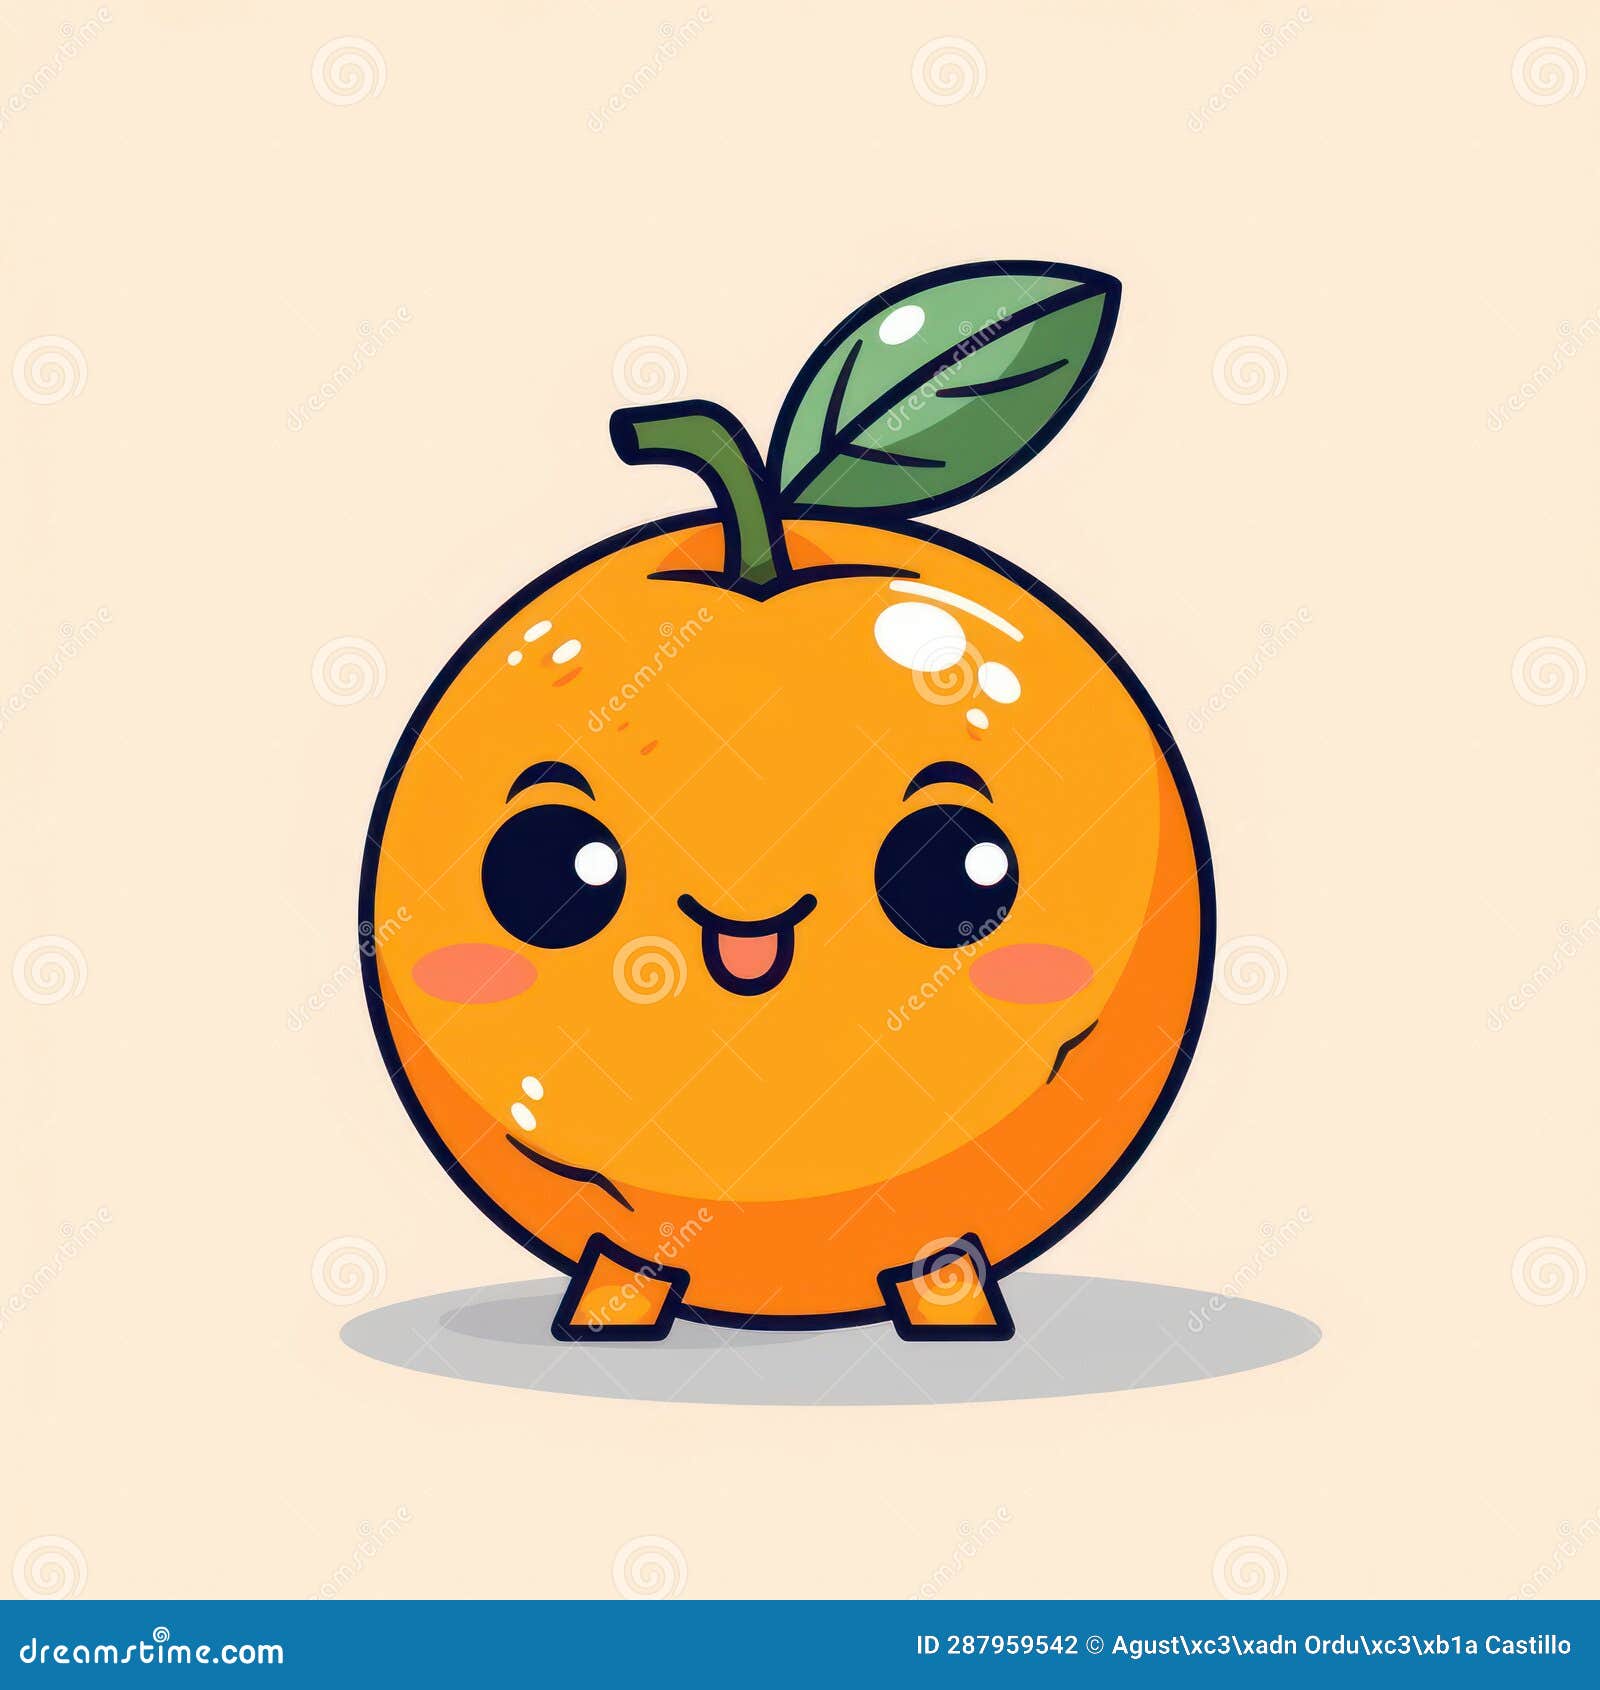 A Cartoon Illustration of an Orange. Stock Photo - Image of tropical ...